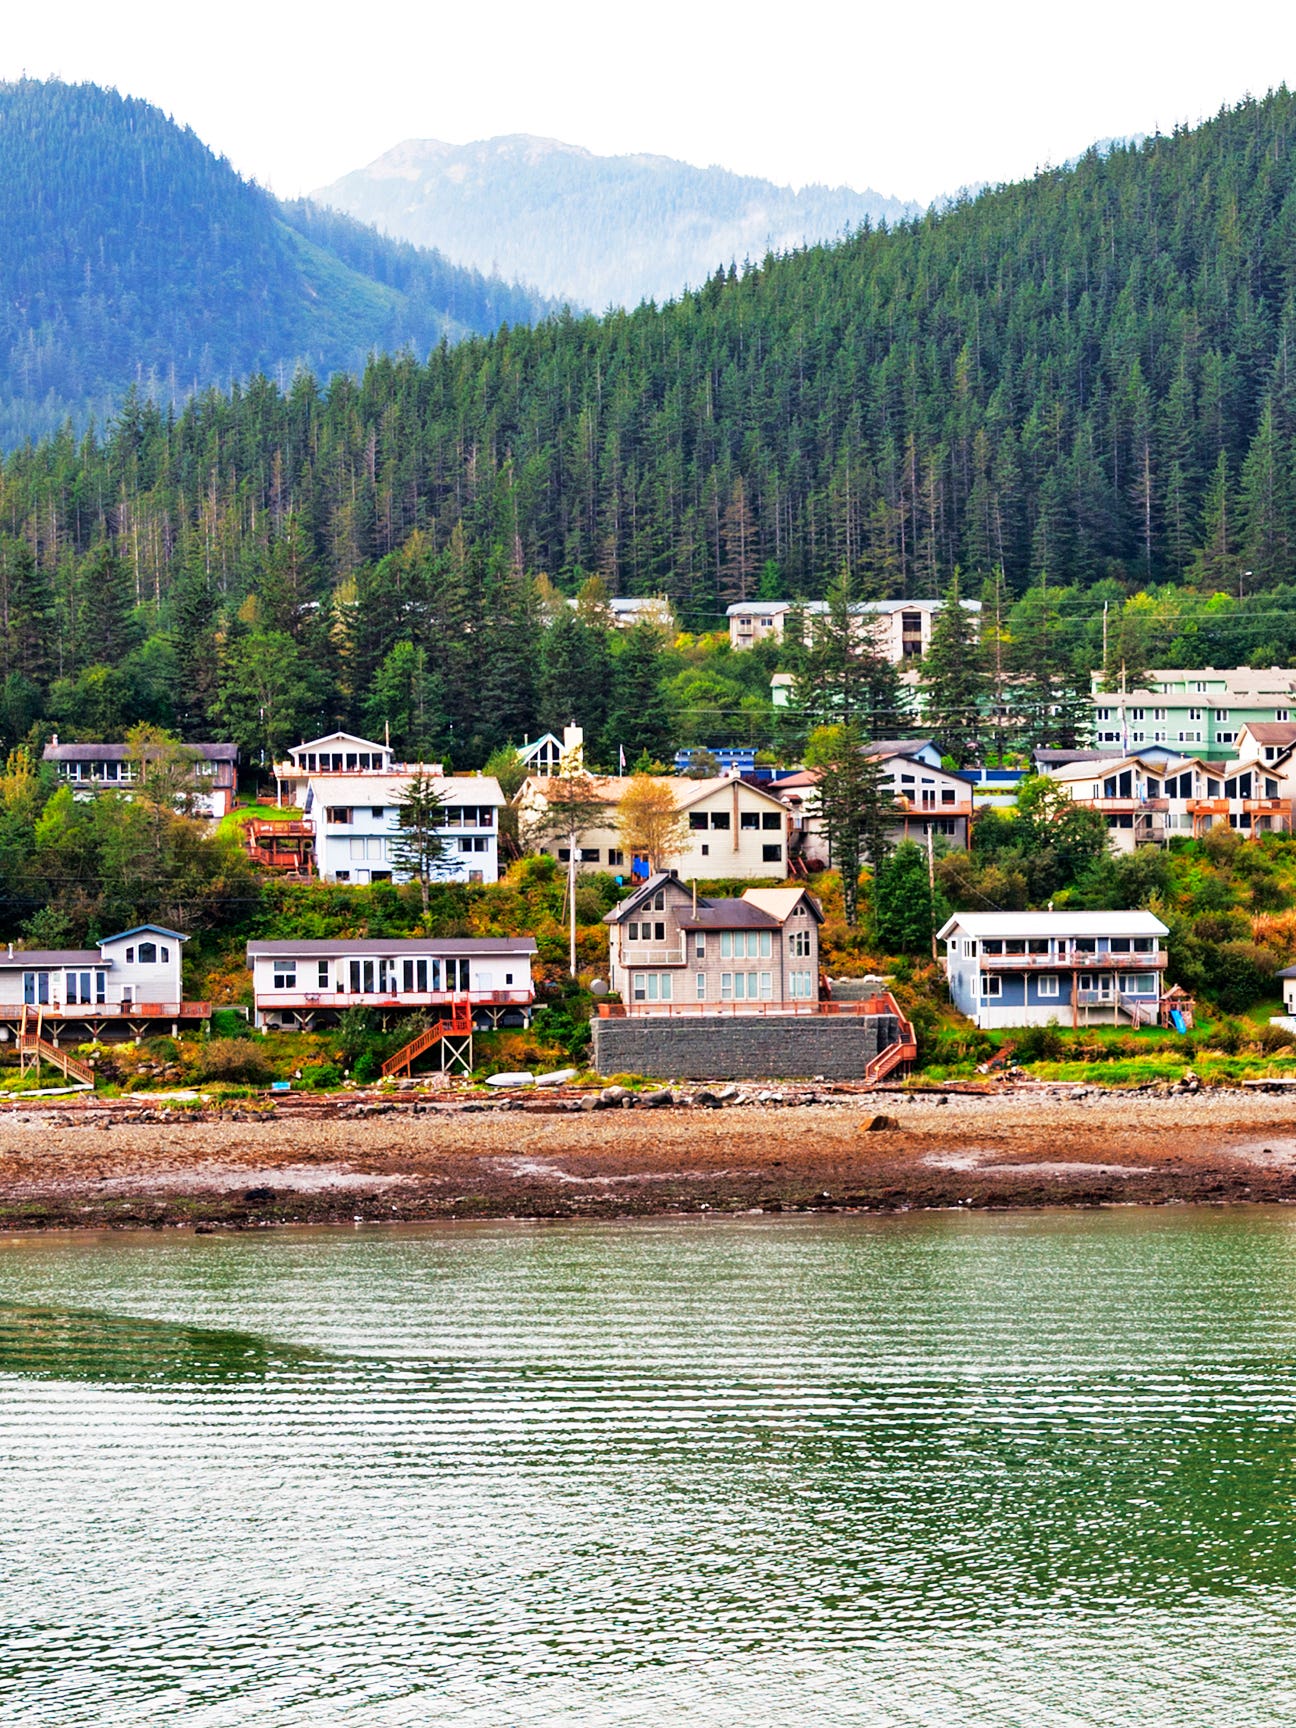 photo of junea alaska by a lake and mountains